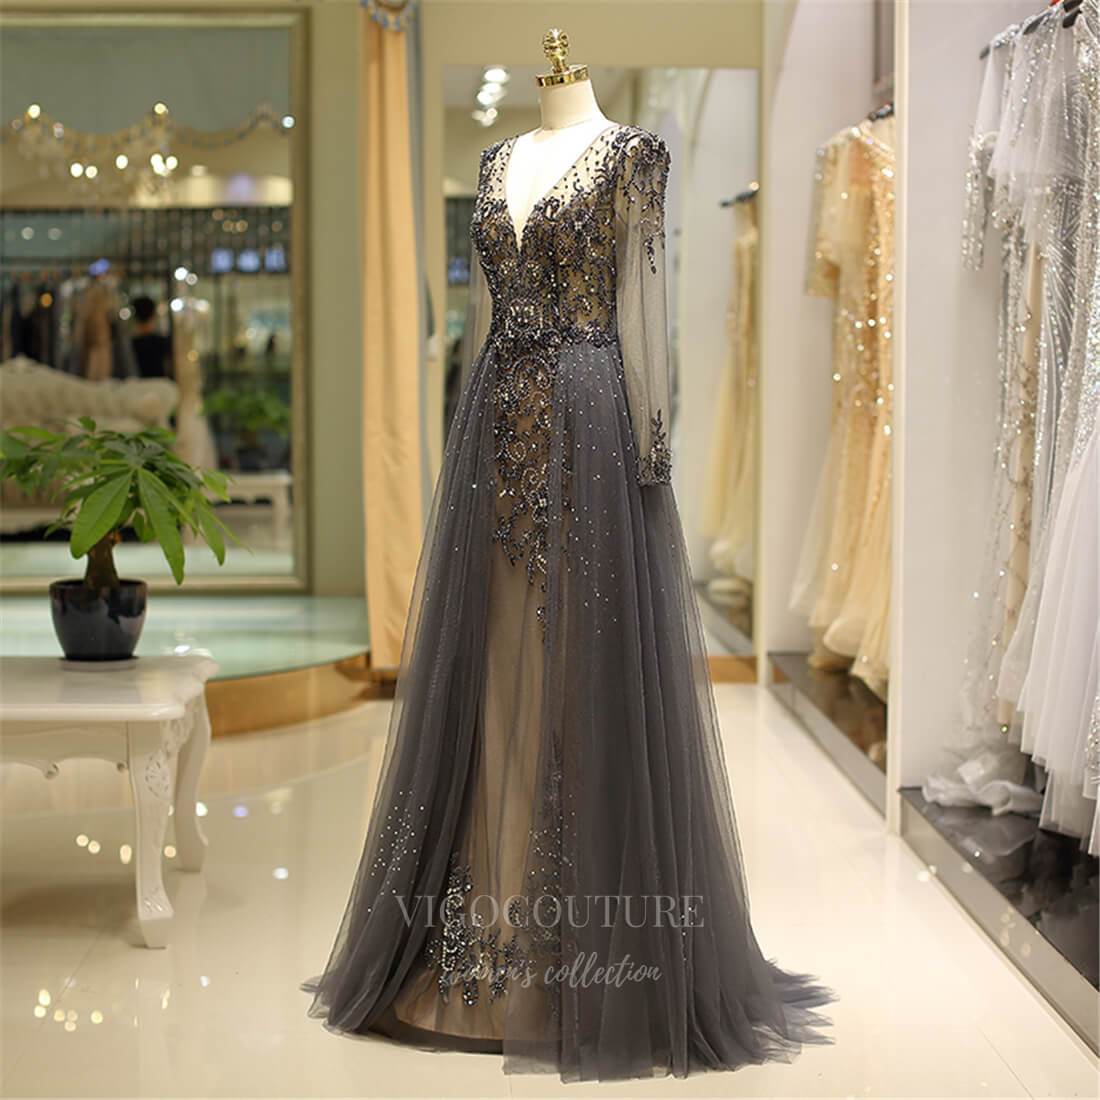 vigocouture-Beaded Lace Applique Long Sleeve Prom Dress 20291-Prom Dresses-vigocouture-